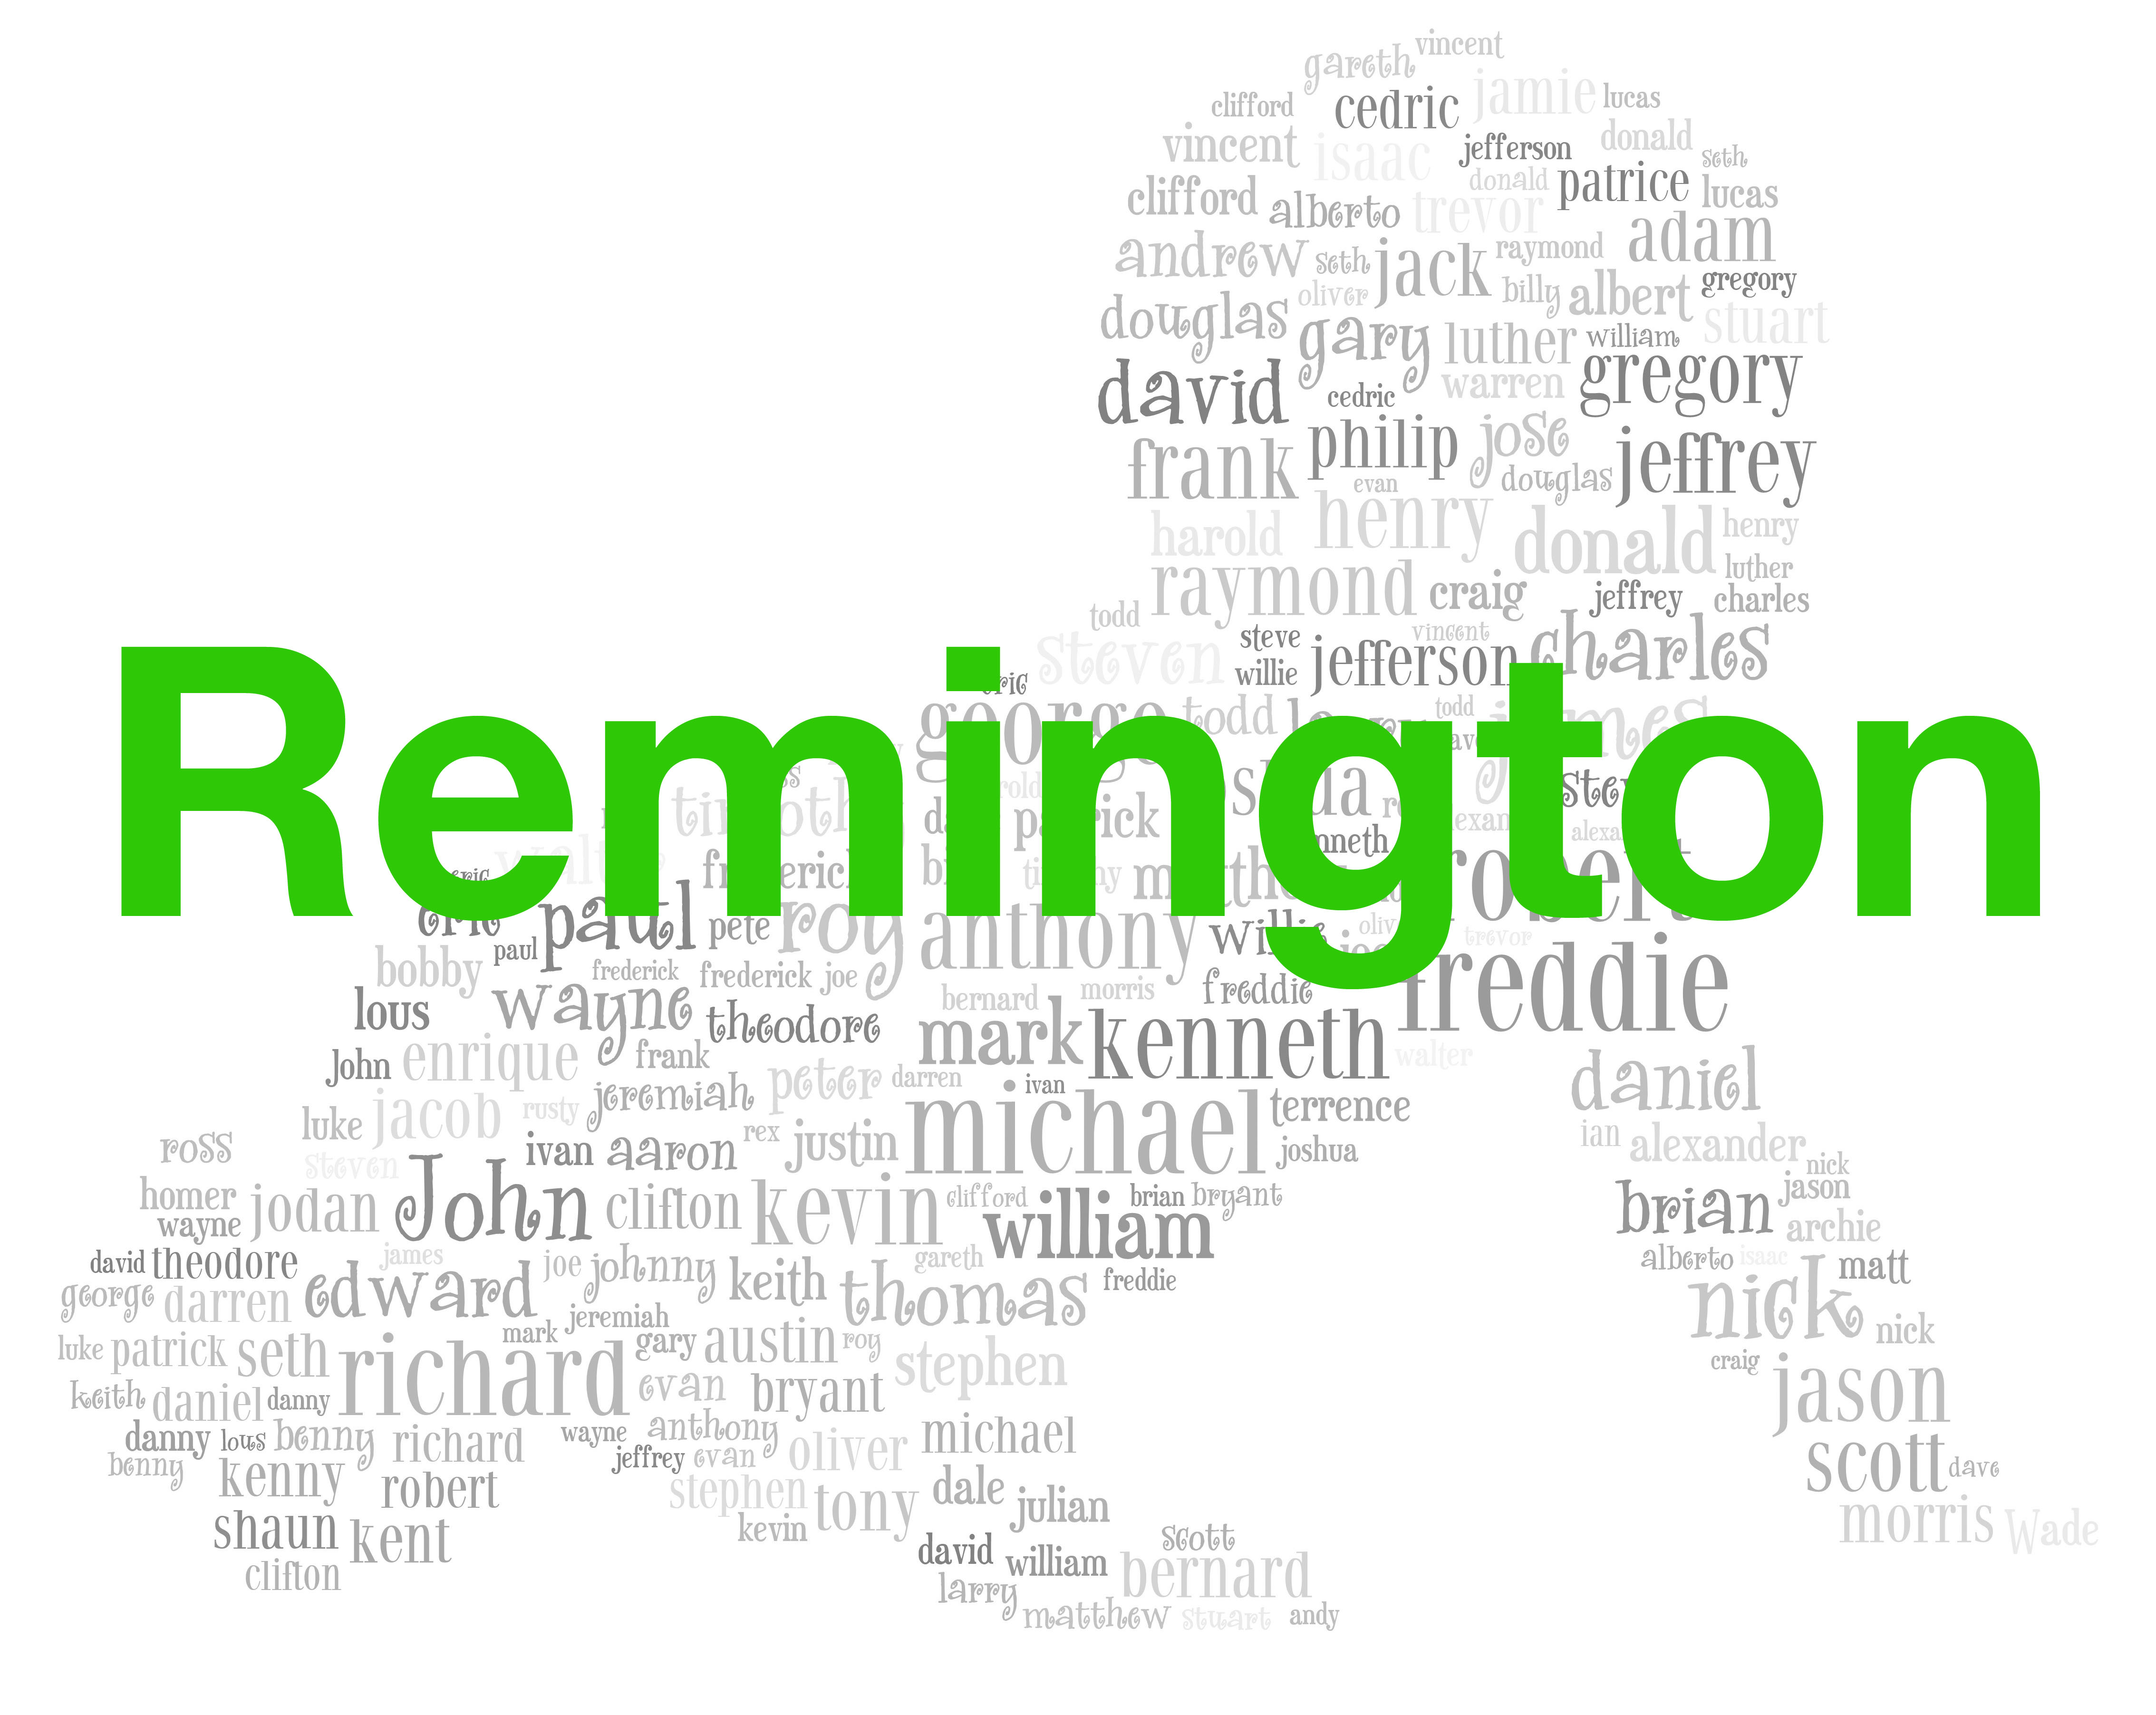 Boys: Remington